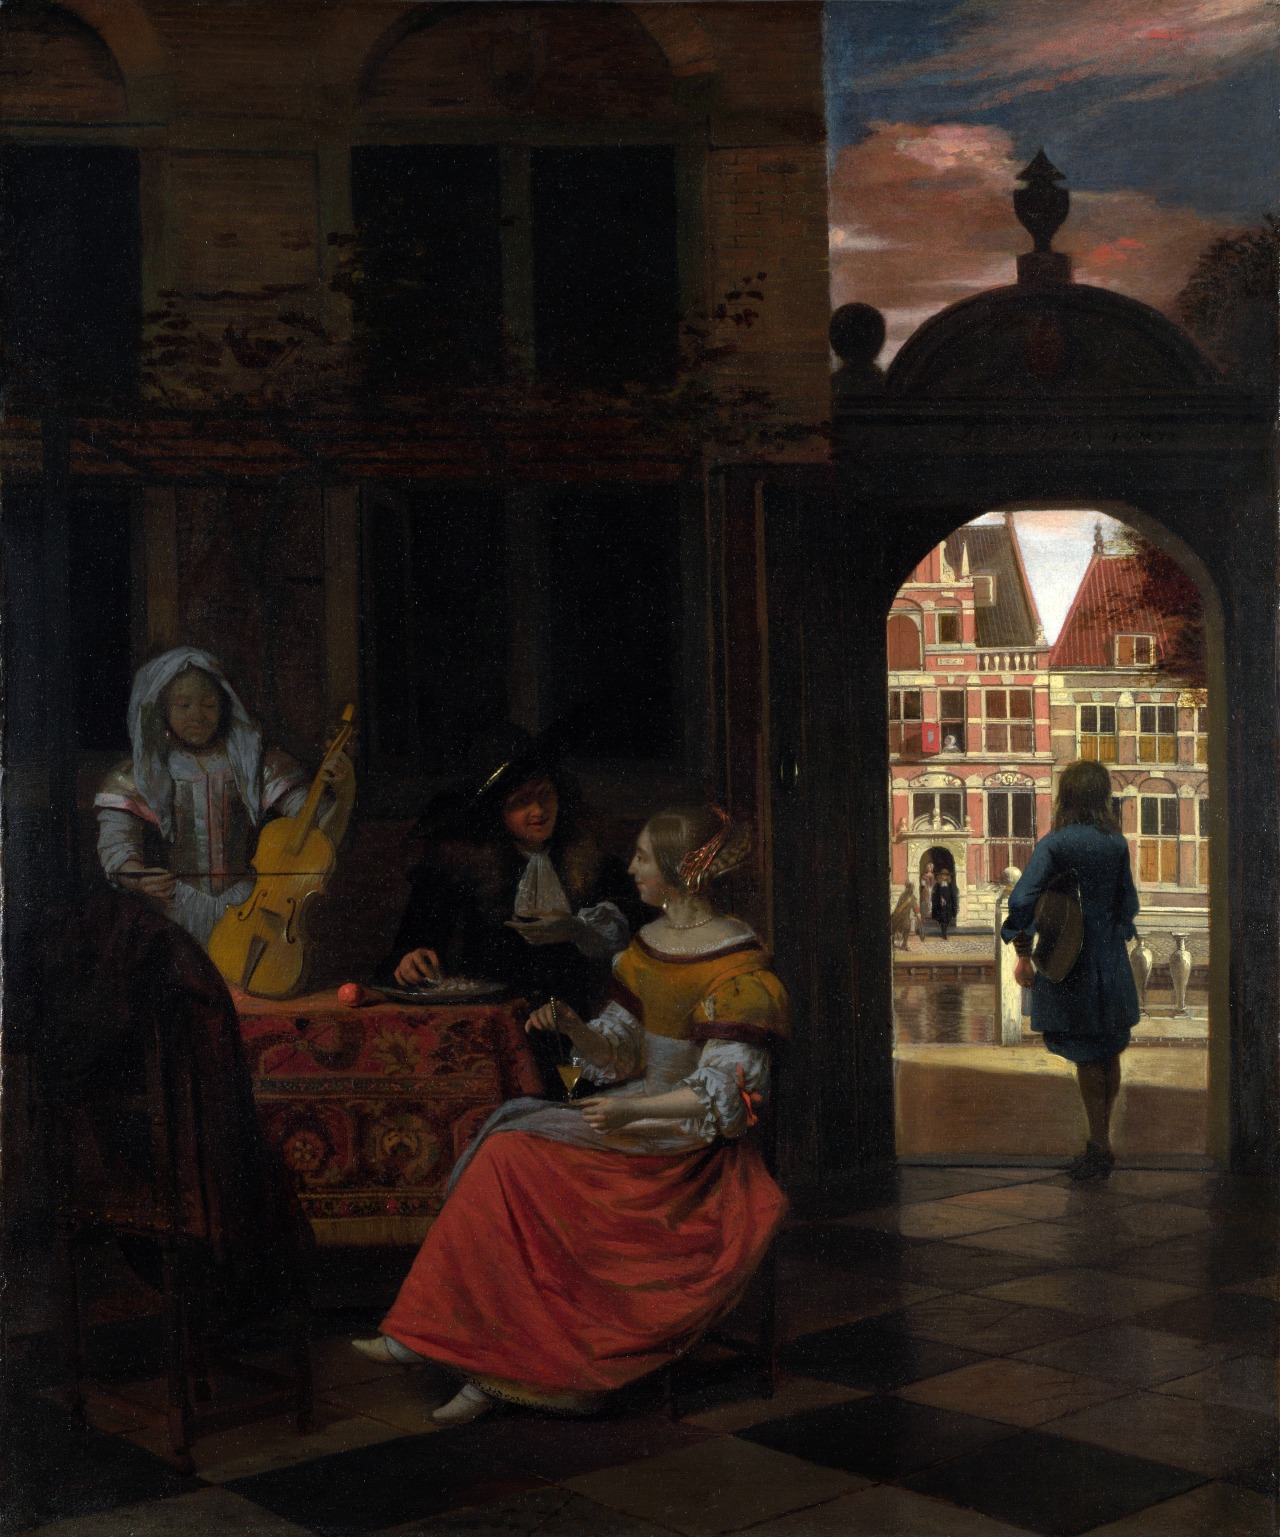 master-painters:
“Pieter de Hooch - A Musical Party in a Courtyard - 1677
”